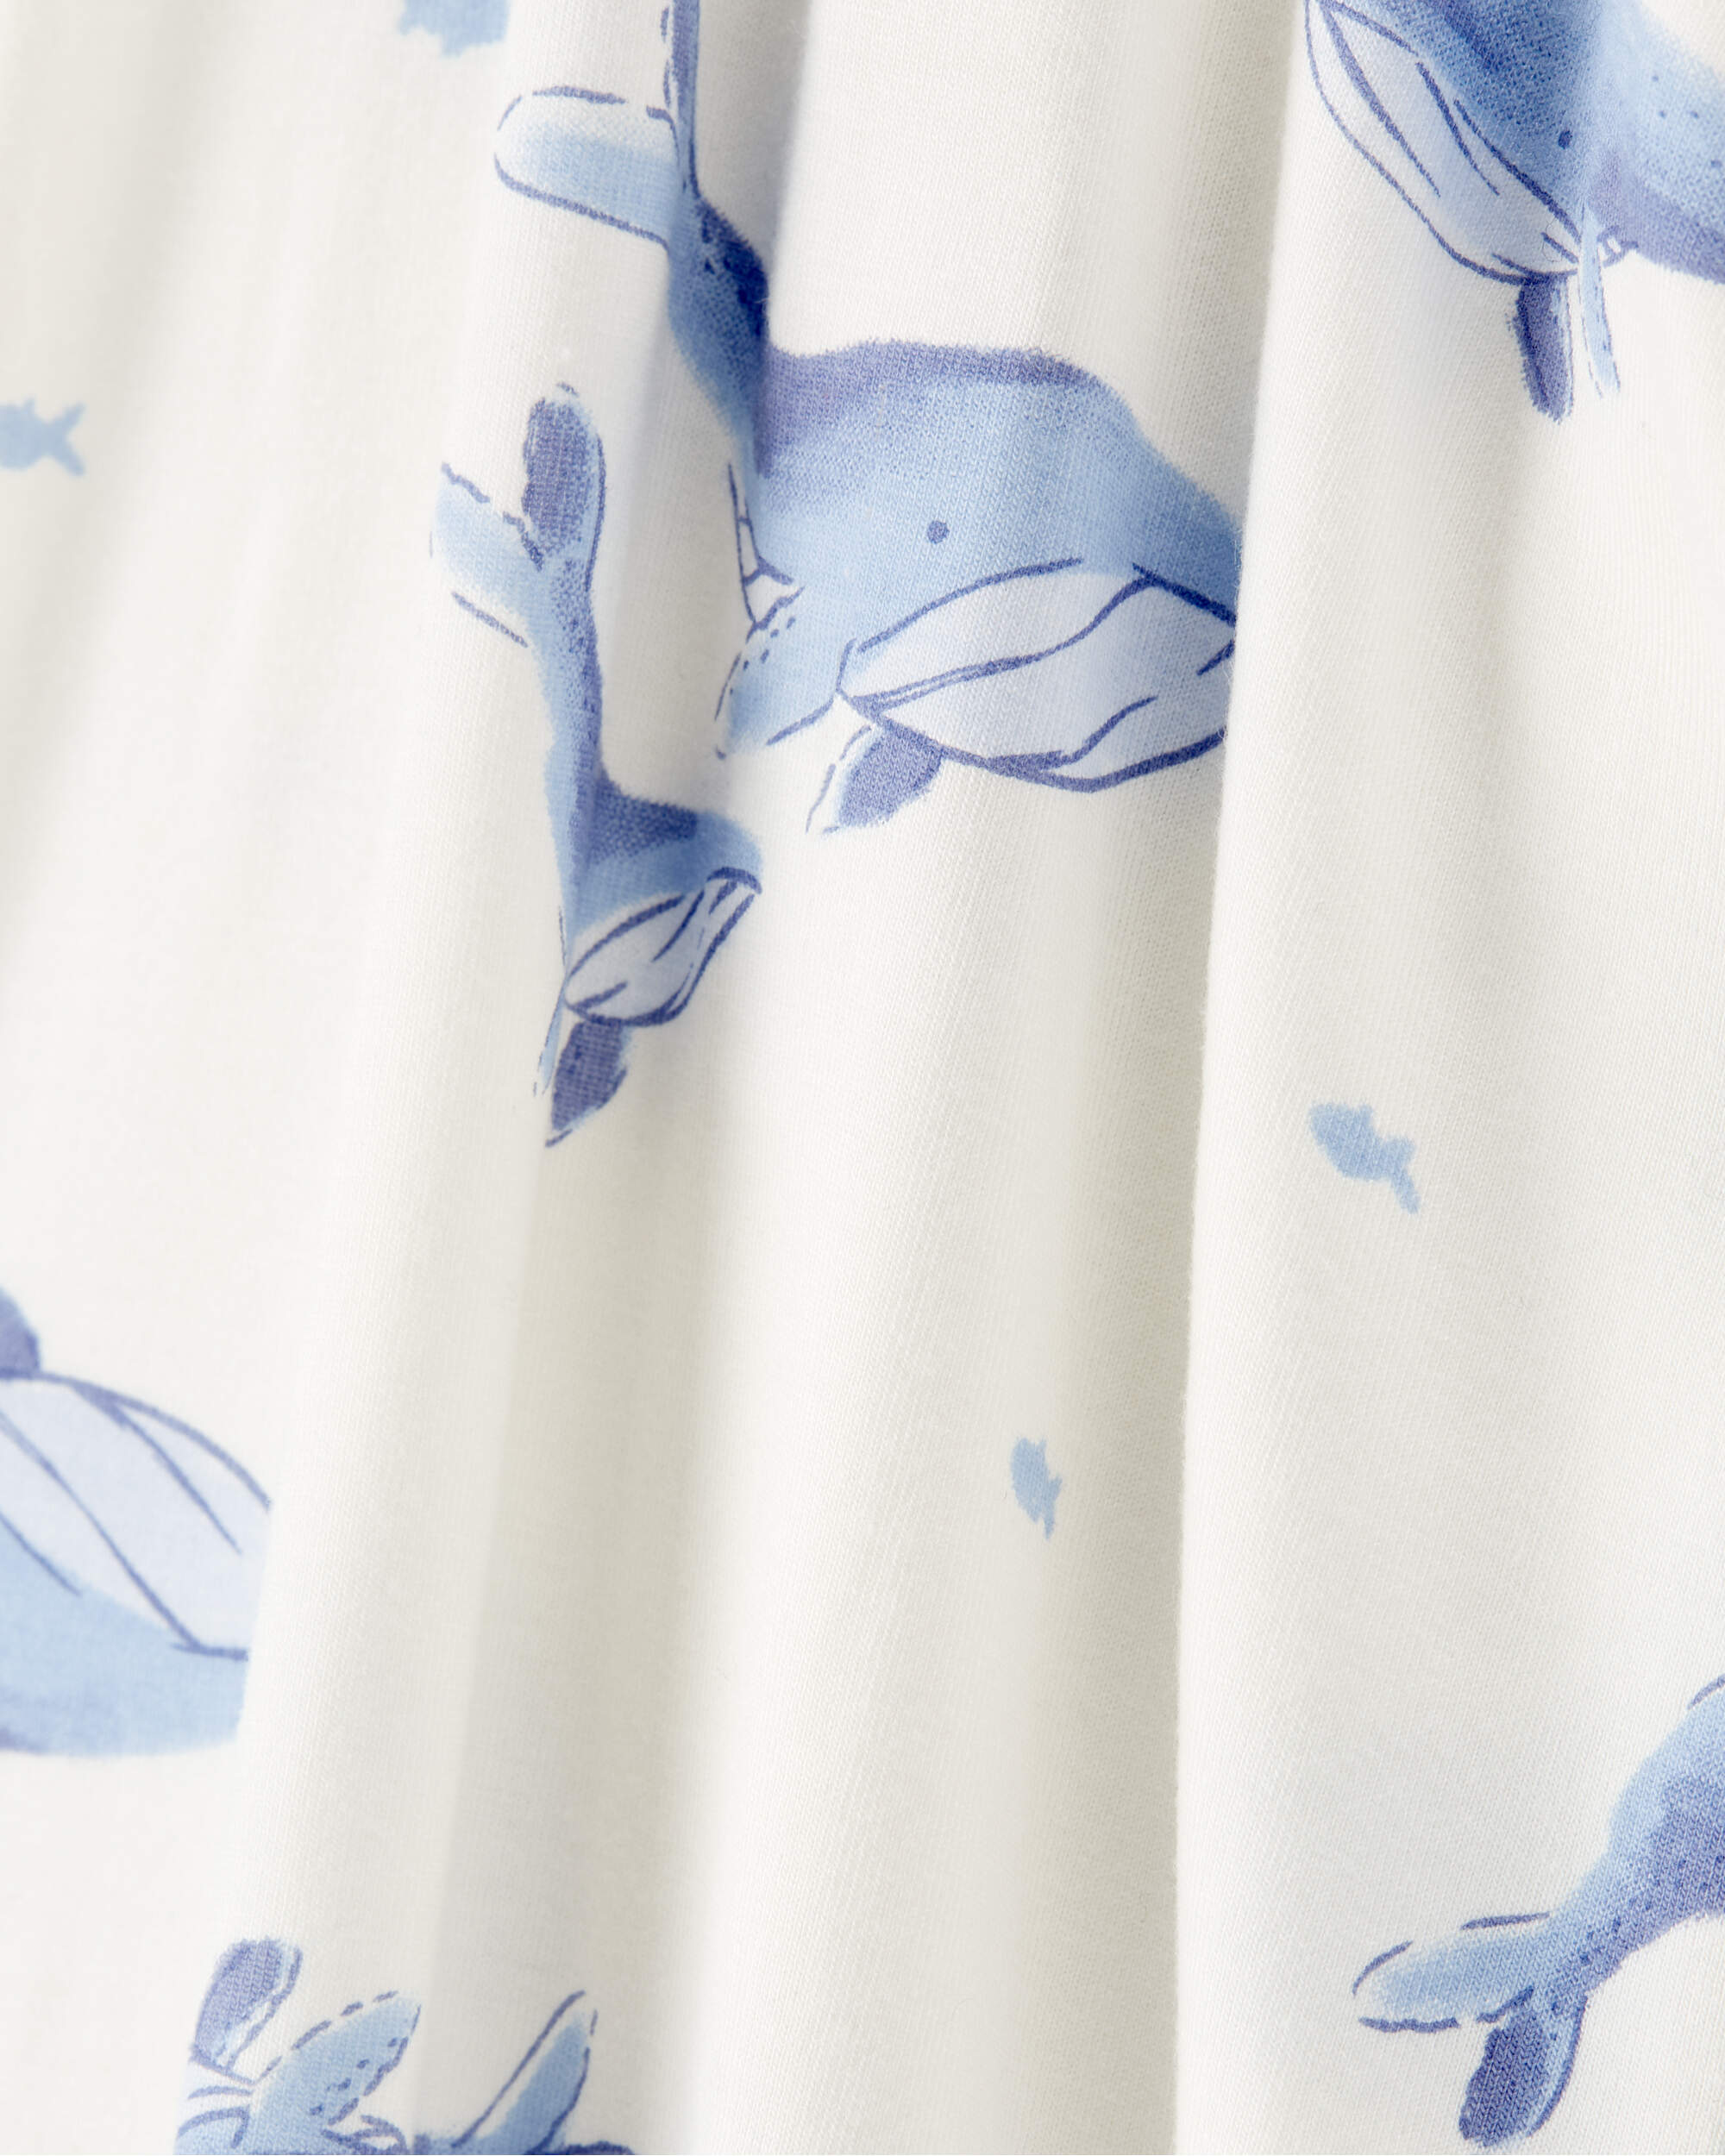 Baby Whale Print 2-Way Zip Sleeper Pyjamas